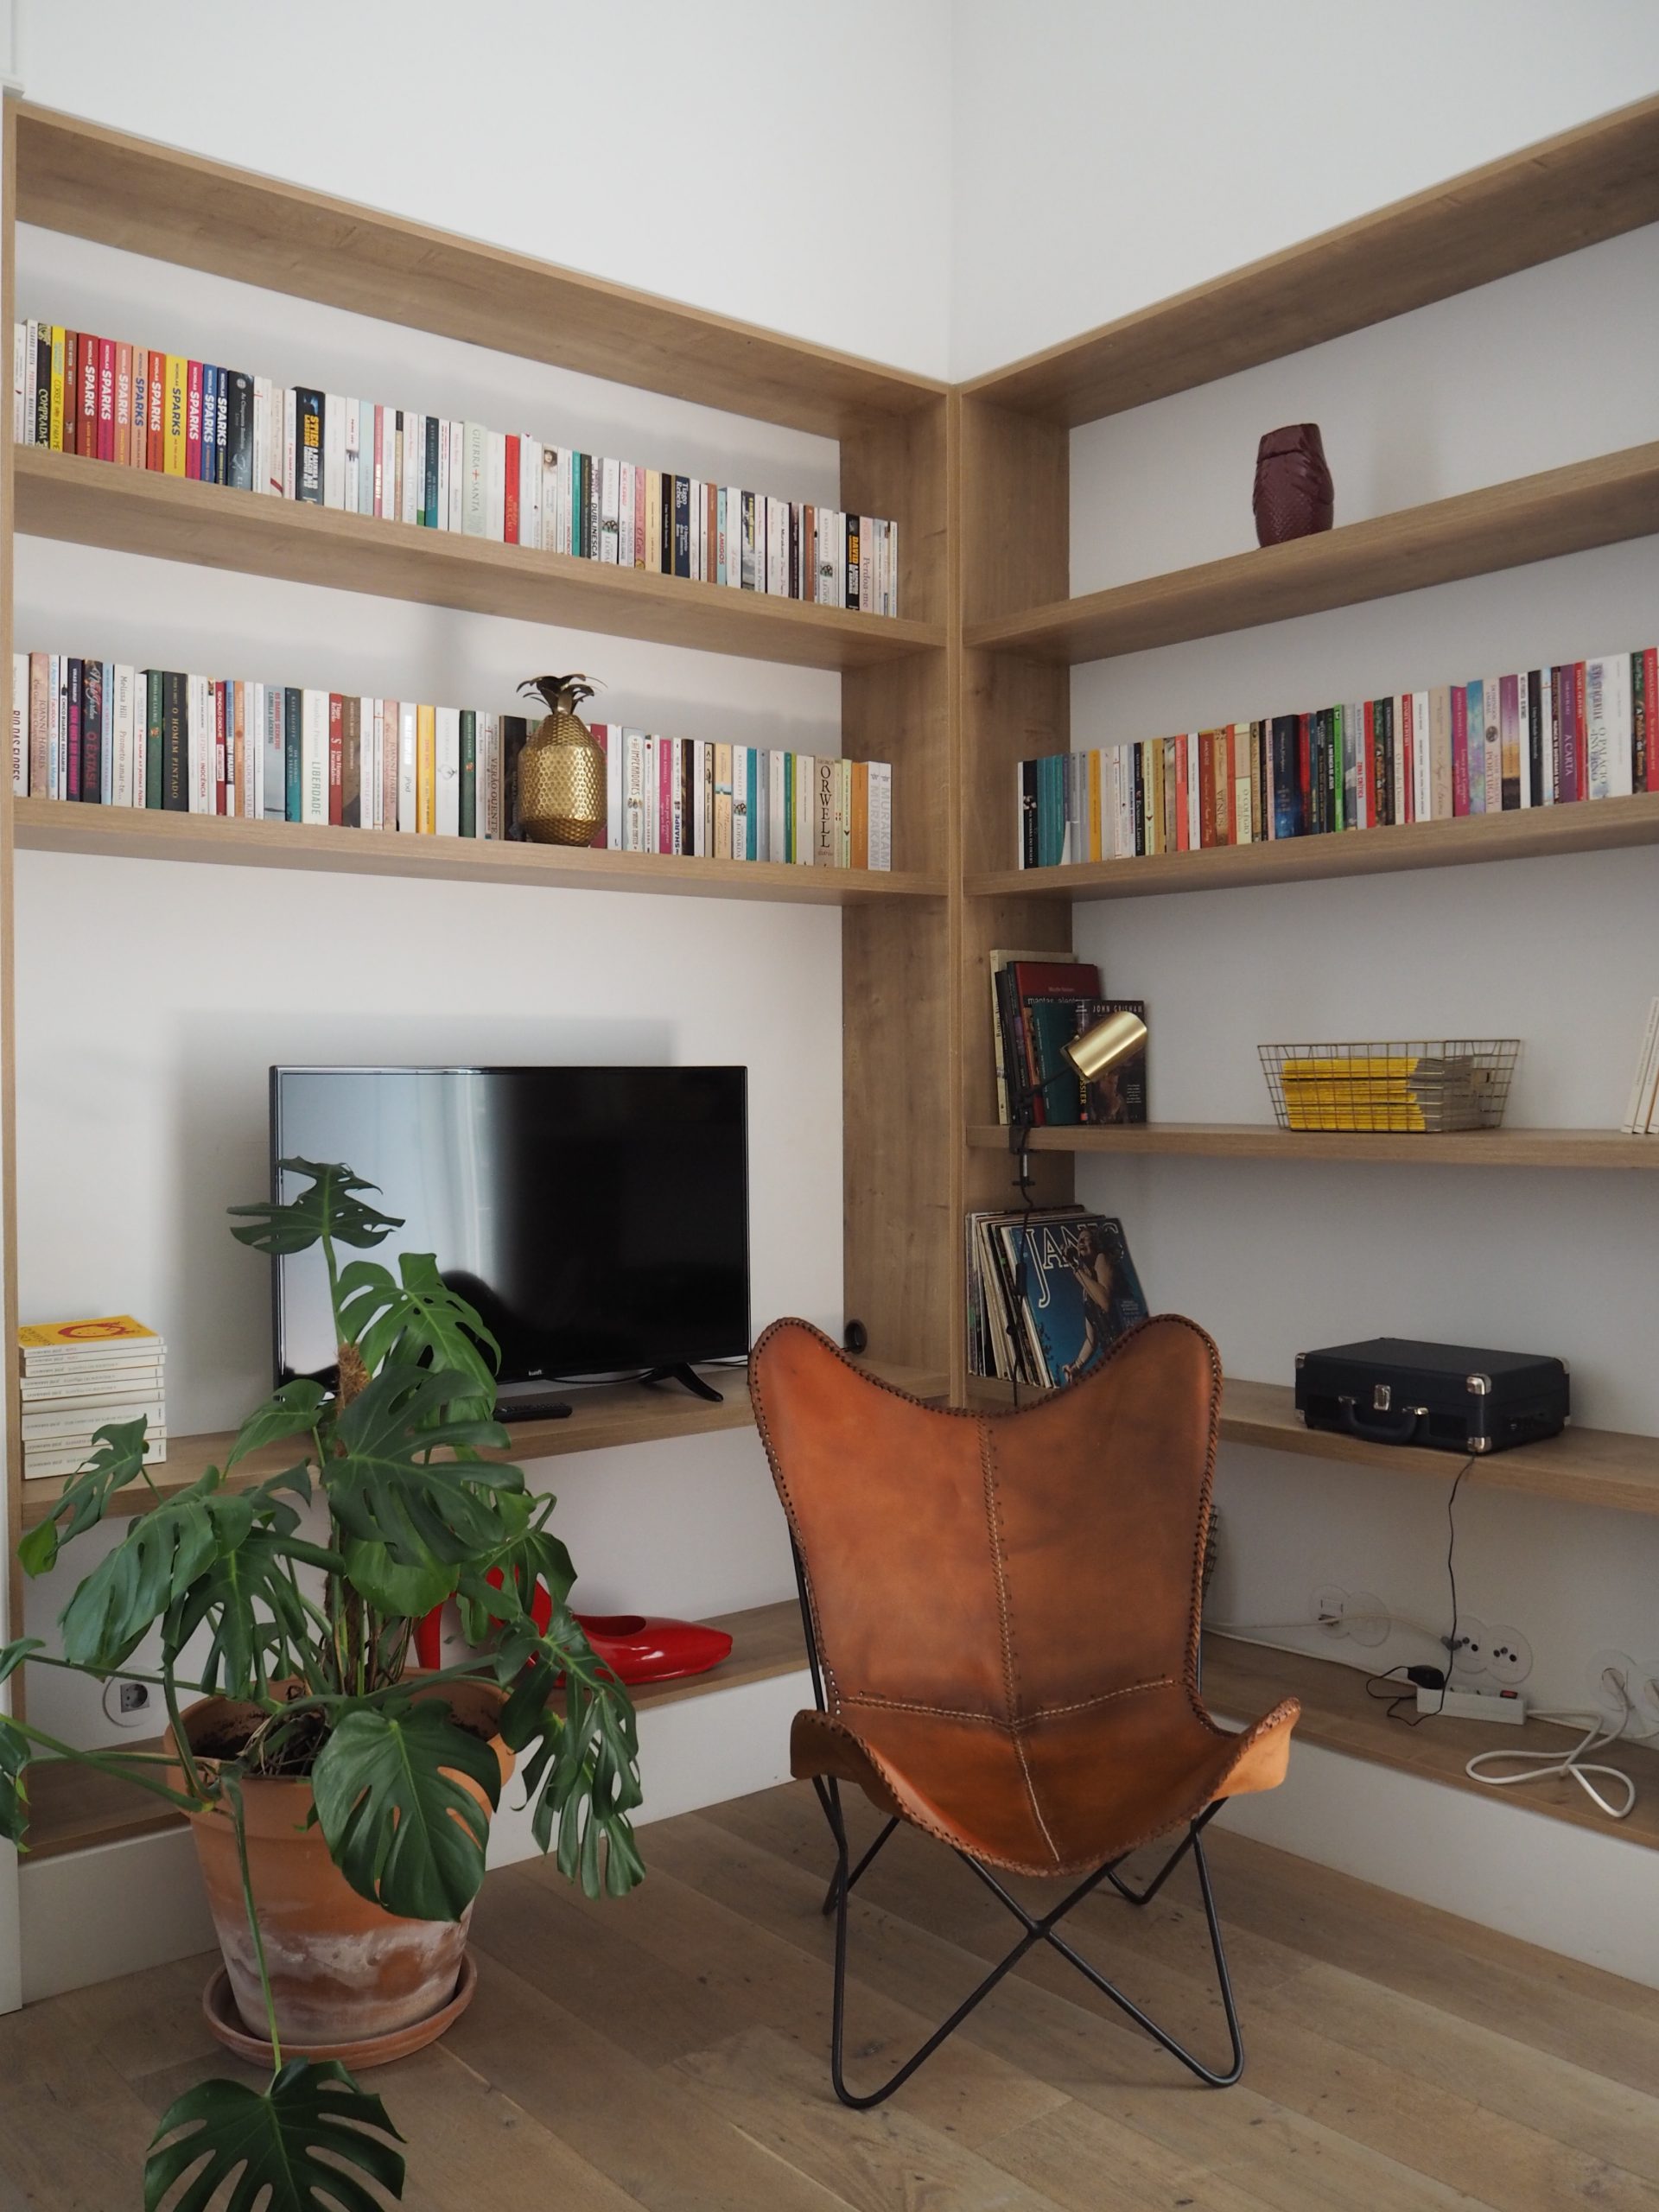 Lisboans - the best vacation apartment rentals | lifestyletraveler.co | IG @lifestyletraveler.co